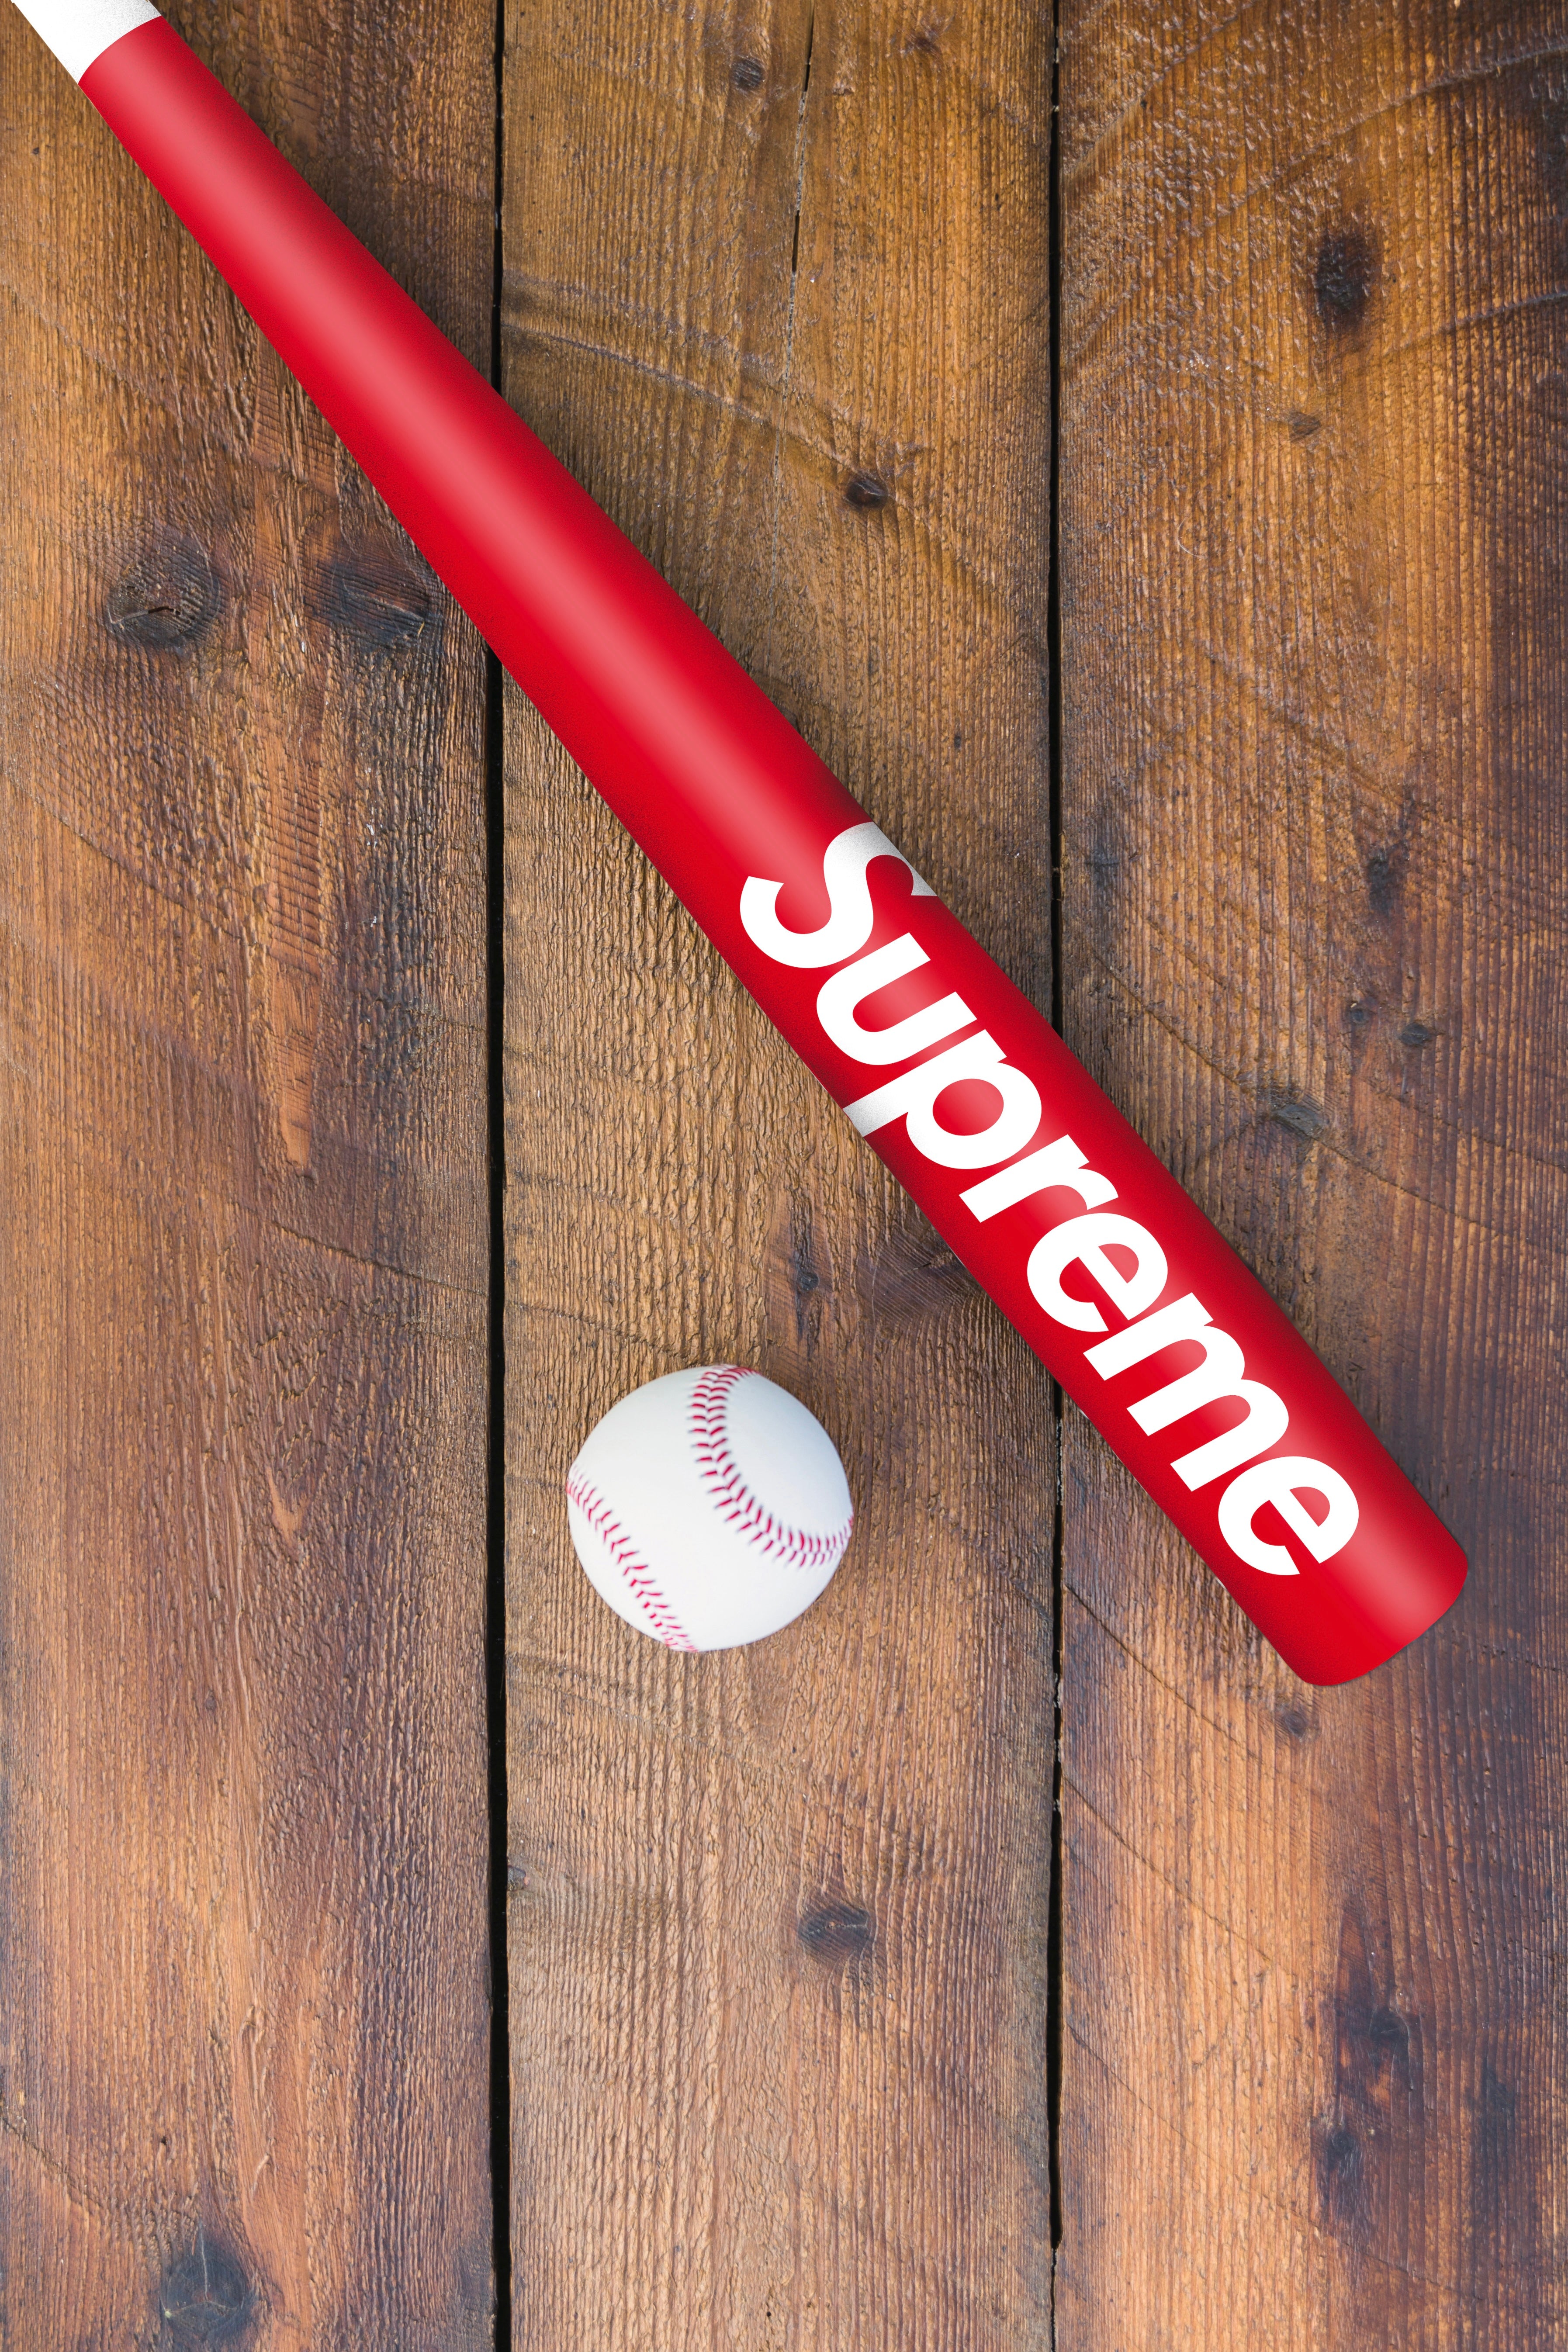 Batte Baseball Supreme – The French Custom